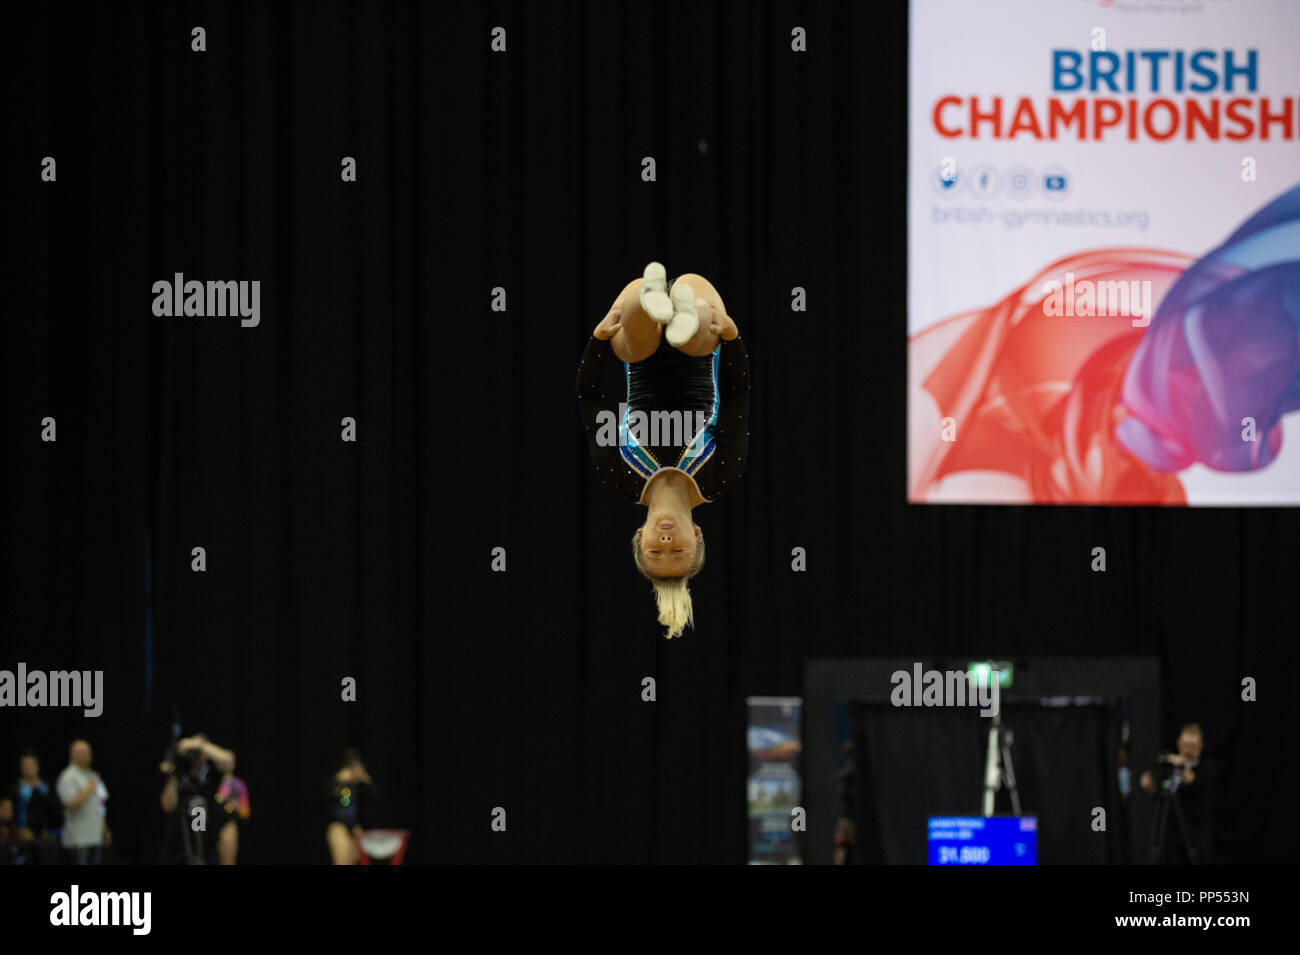 Birmingham, UK. 23rd September 2018. Shanice Davidson, Durham City Gymnastics completing a pass during British Gymnastics Trampoline, DMT and Tumbling British Championships 2018 at the Arena Birmingham, Birmingham, UK. Credit: Iain Scott Photography/Alamy Live News Stock Photo